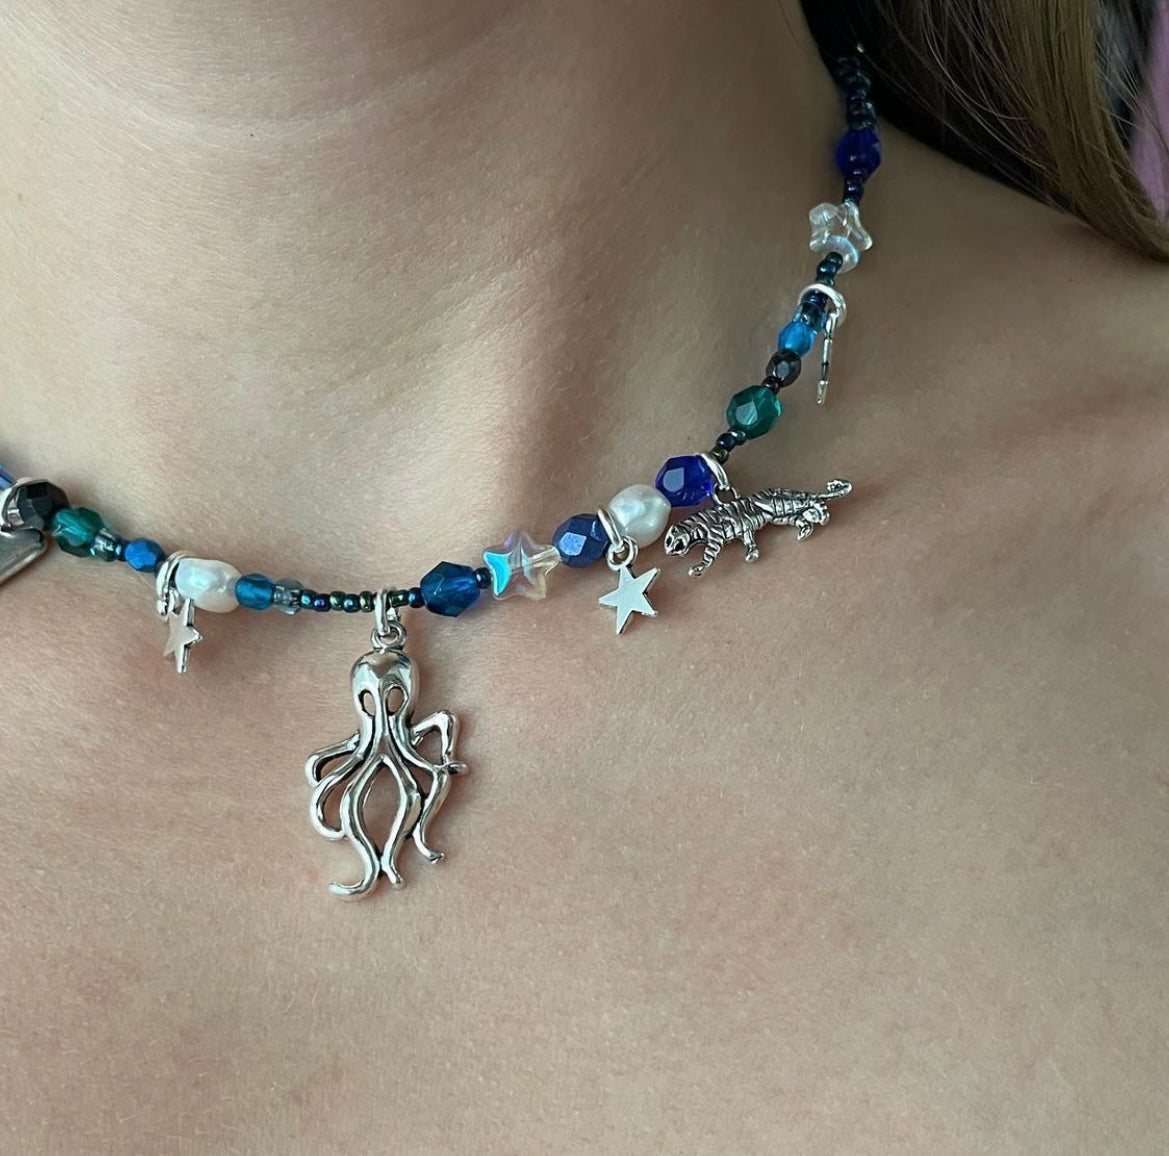 “Deep Blue” necklace